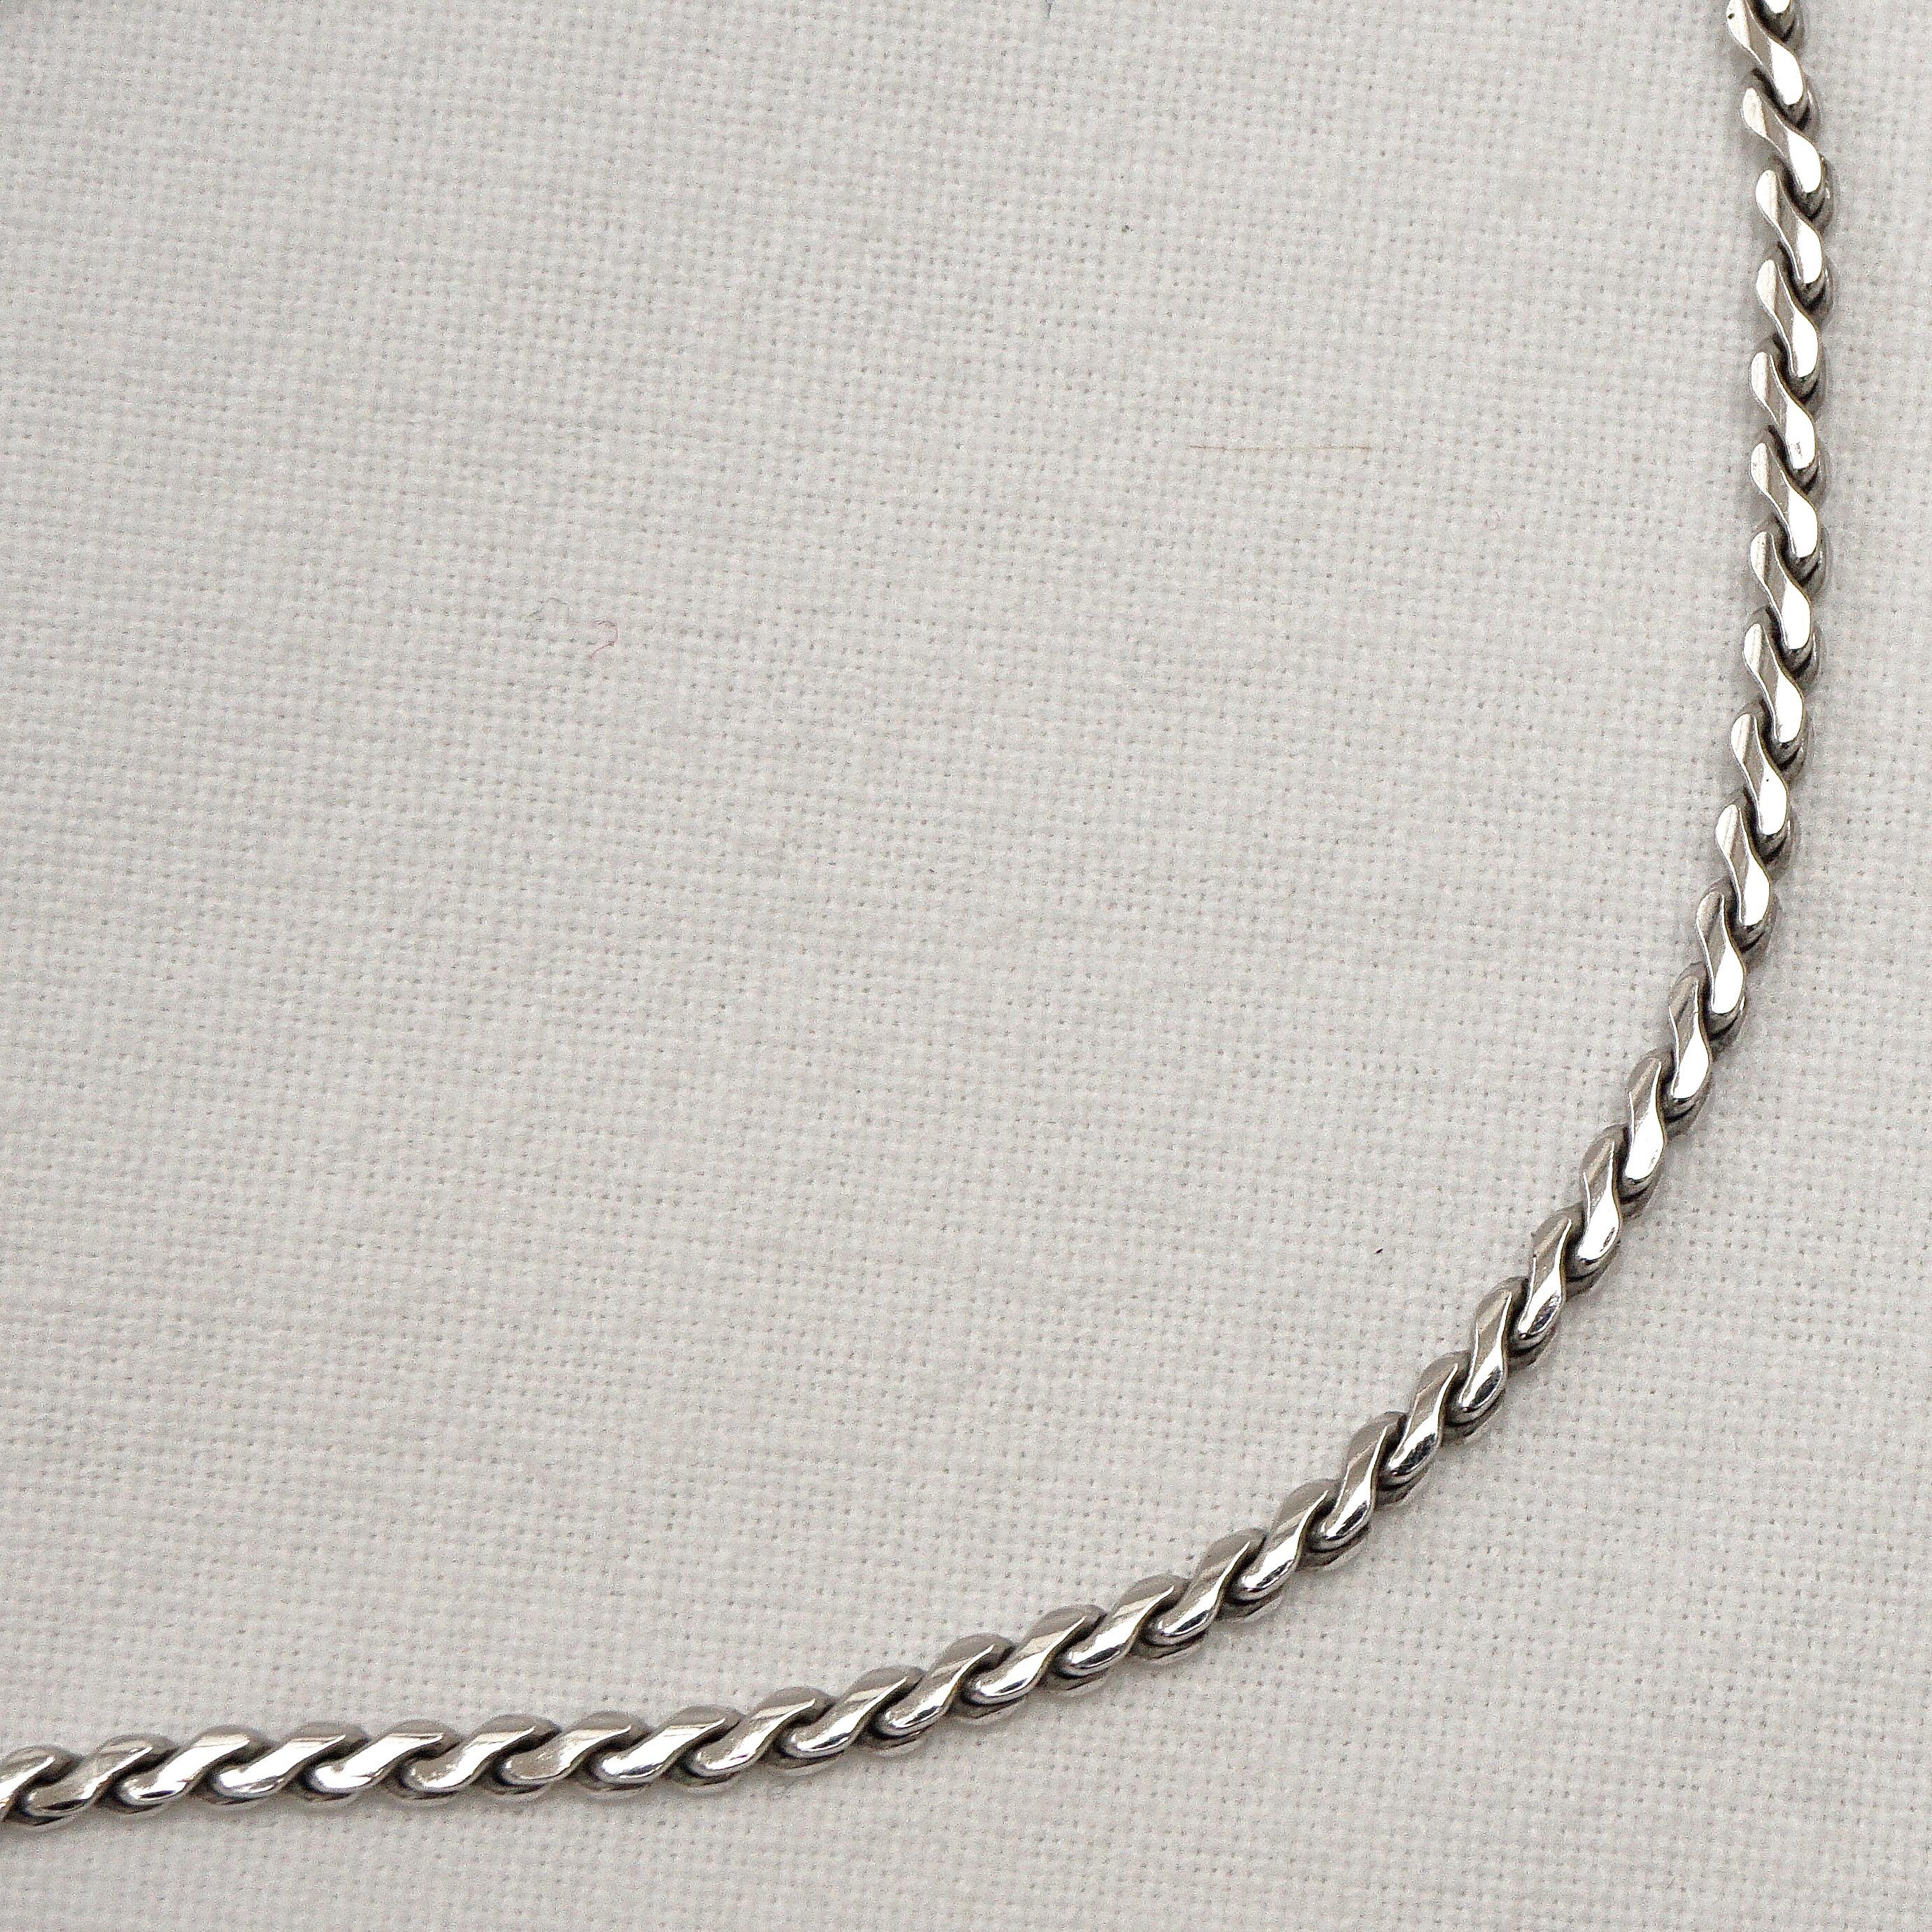 Krementz 14K White Gold Overlay Leaf Design Rhinestone Necklace and Earring Set For Sale 3